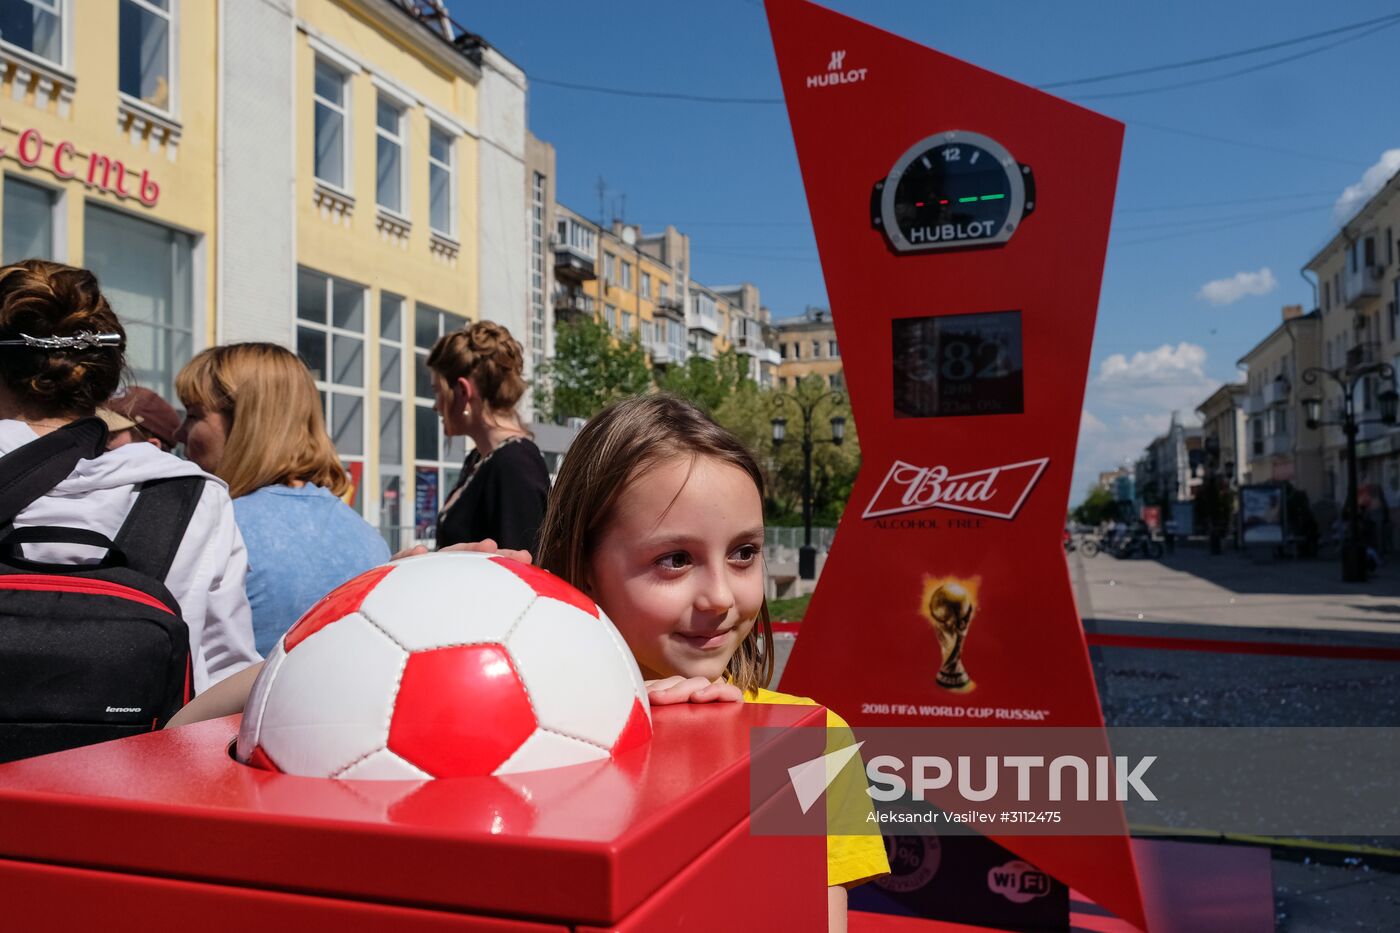 2018 FIFA World Cup countdown clock unveiled in Samara